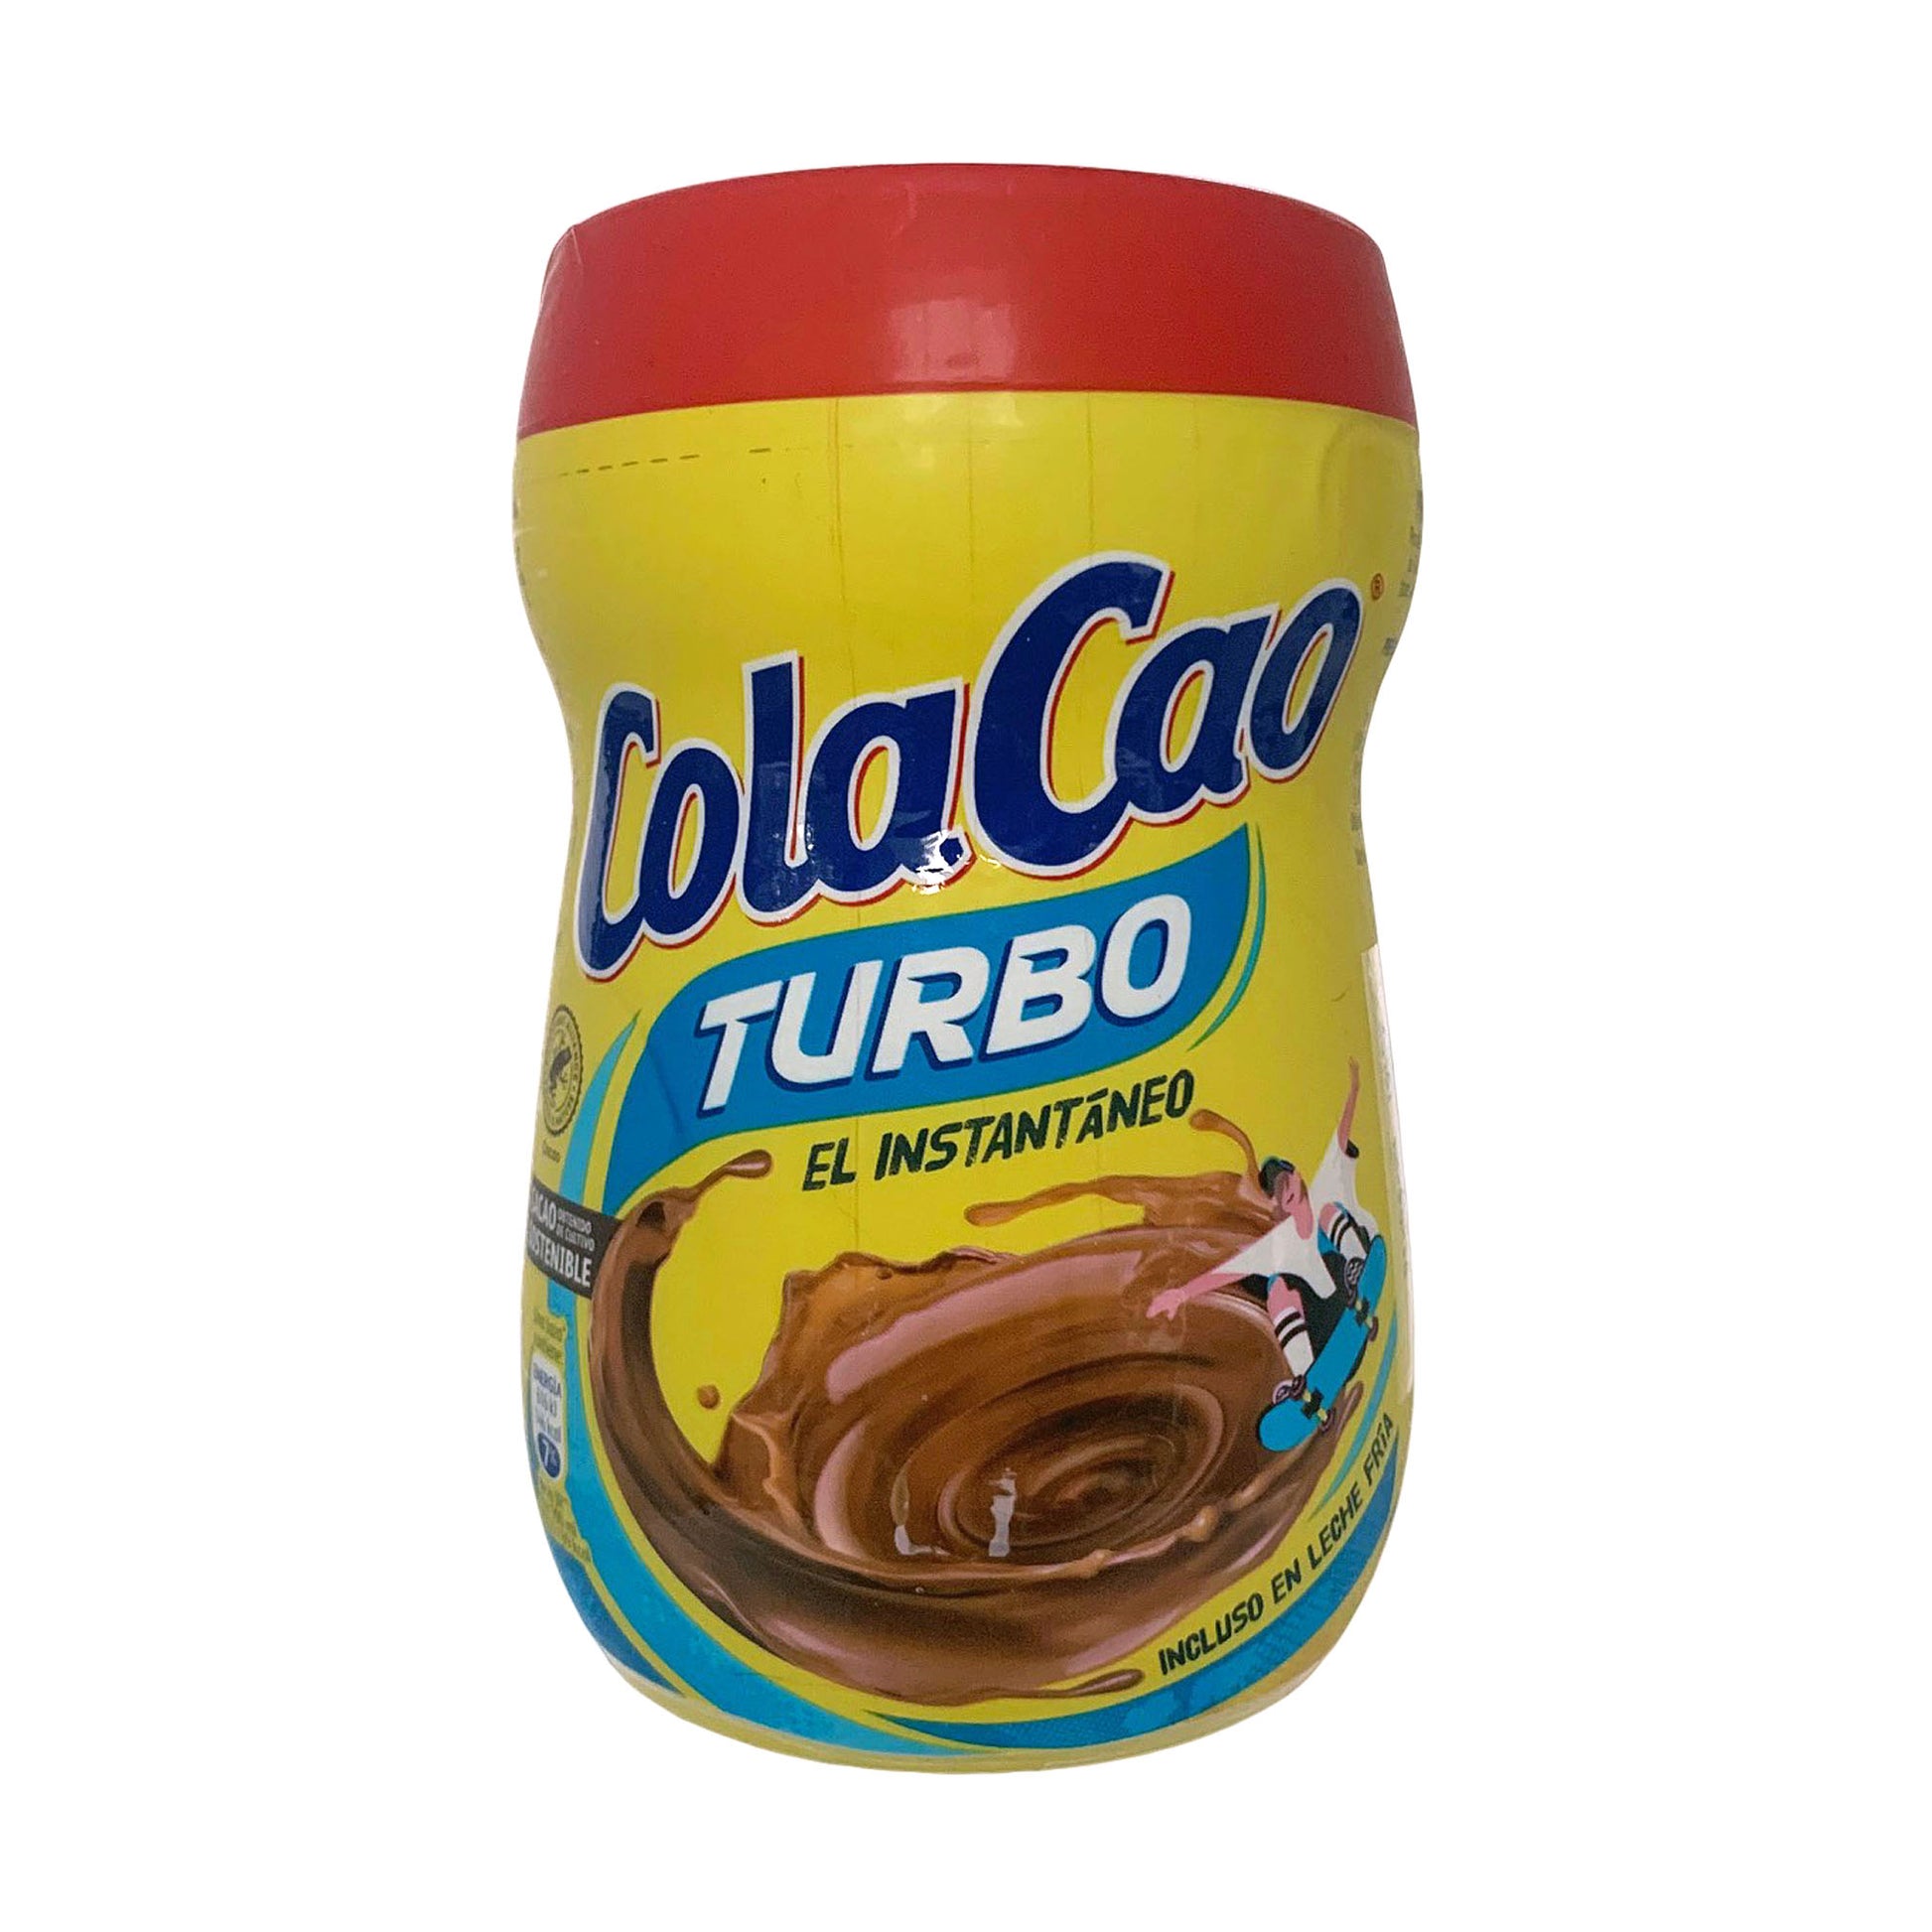 300 gr - SPANISH COLA CAO 0 % ADDED SUGARS ORIGINAL HOT CHOCOLATE DRINK